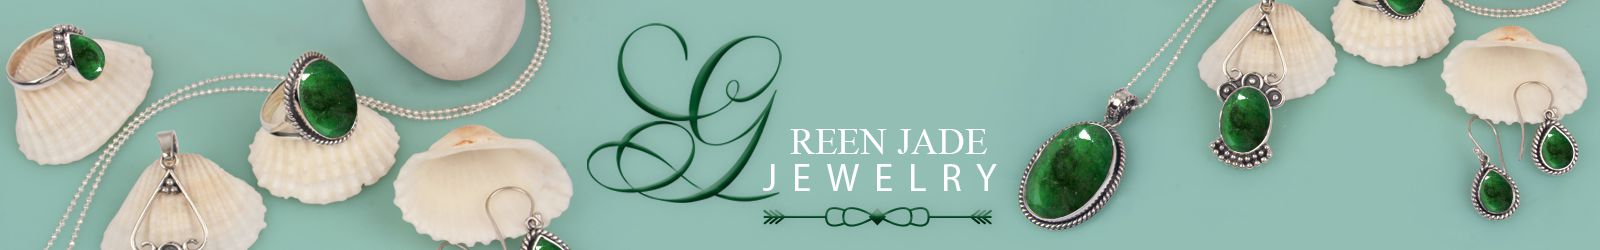 Silver Green Jade Jewelry Wholesale Supplier